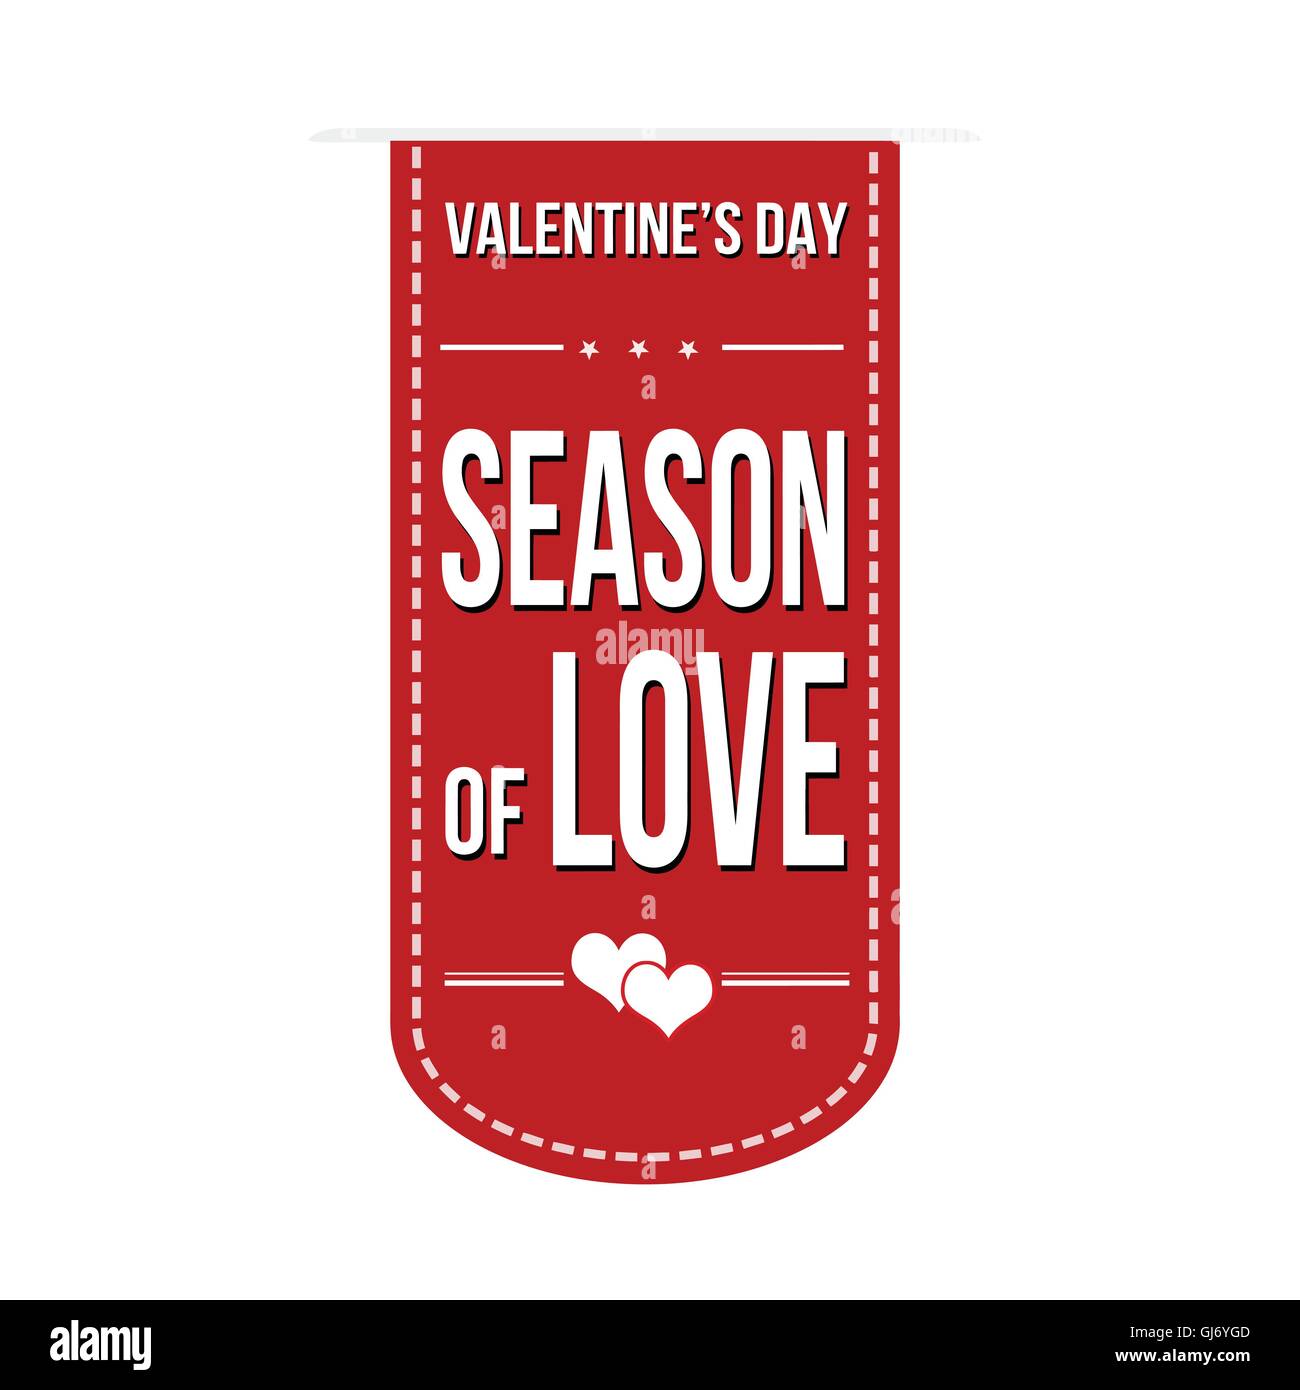 Season of love banner Stock Vector